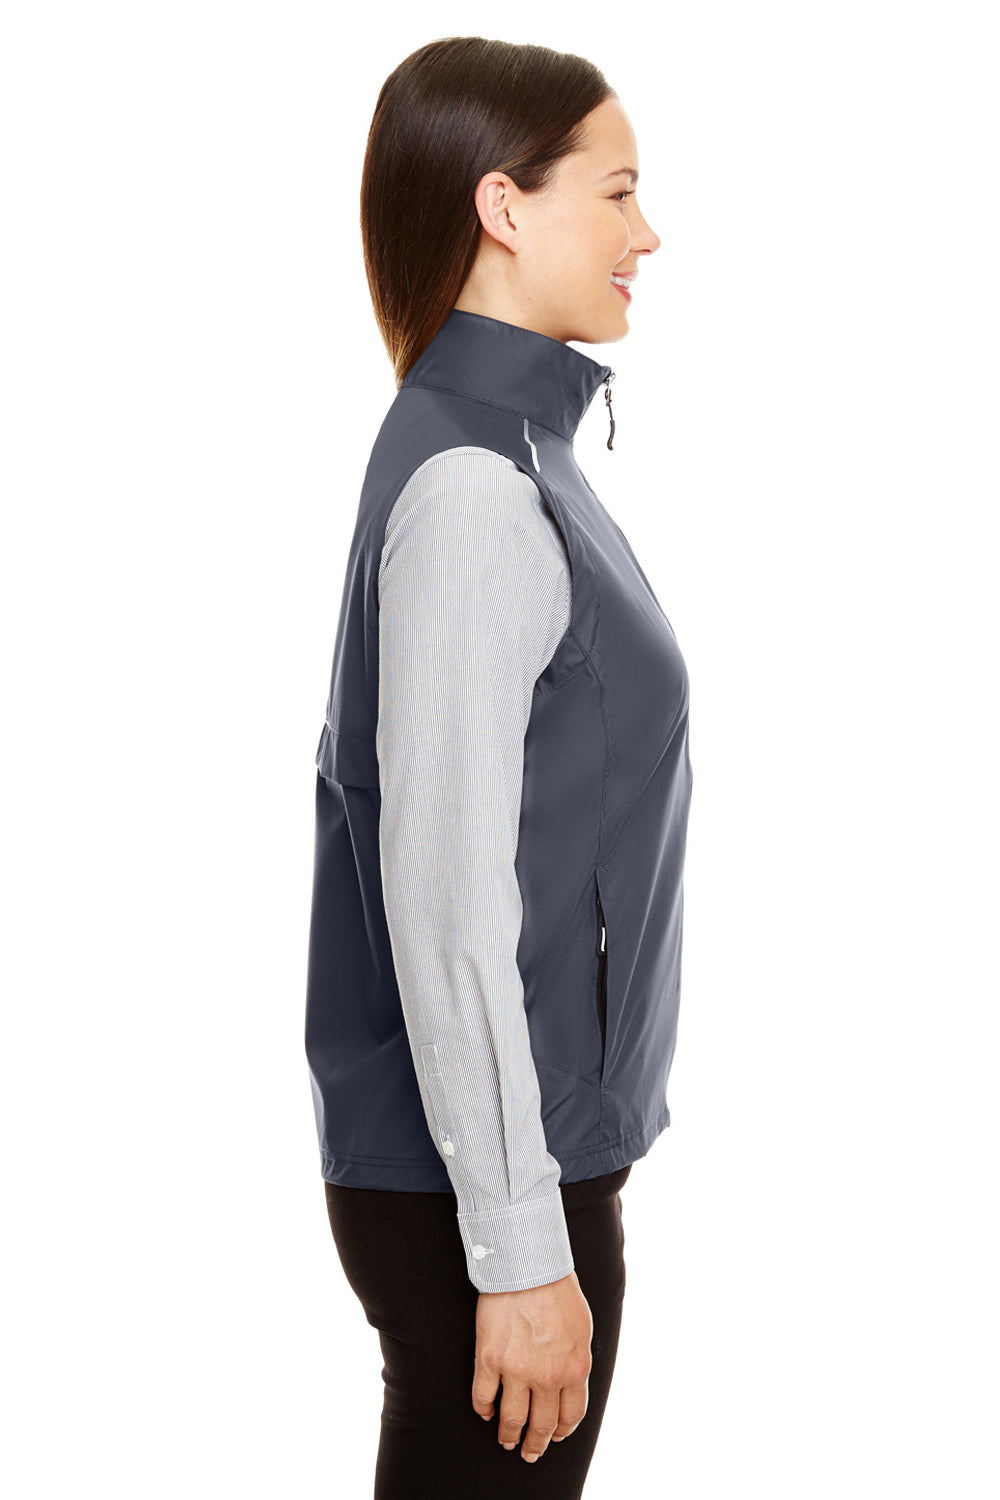 Core 365 CE703W Womens Techno Lite Water Resistant Full Zip Vest Carbon Grey Side